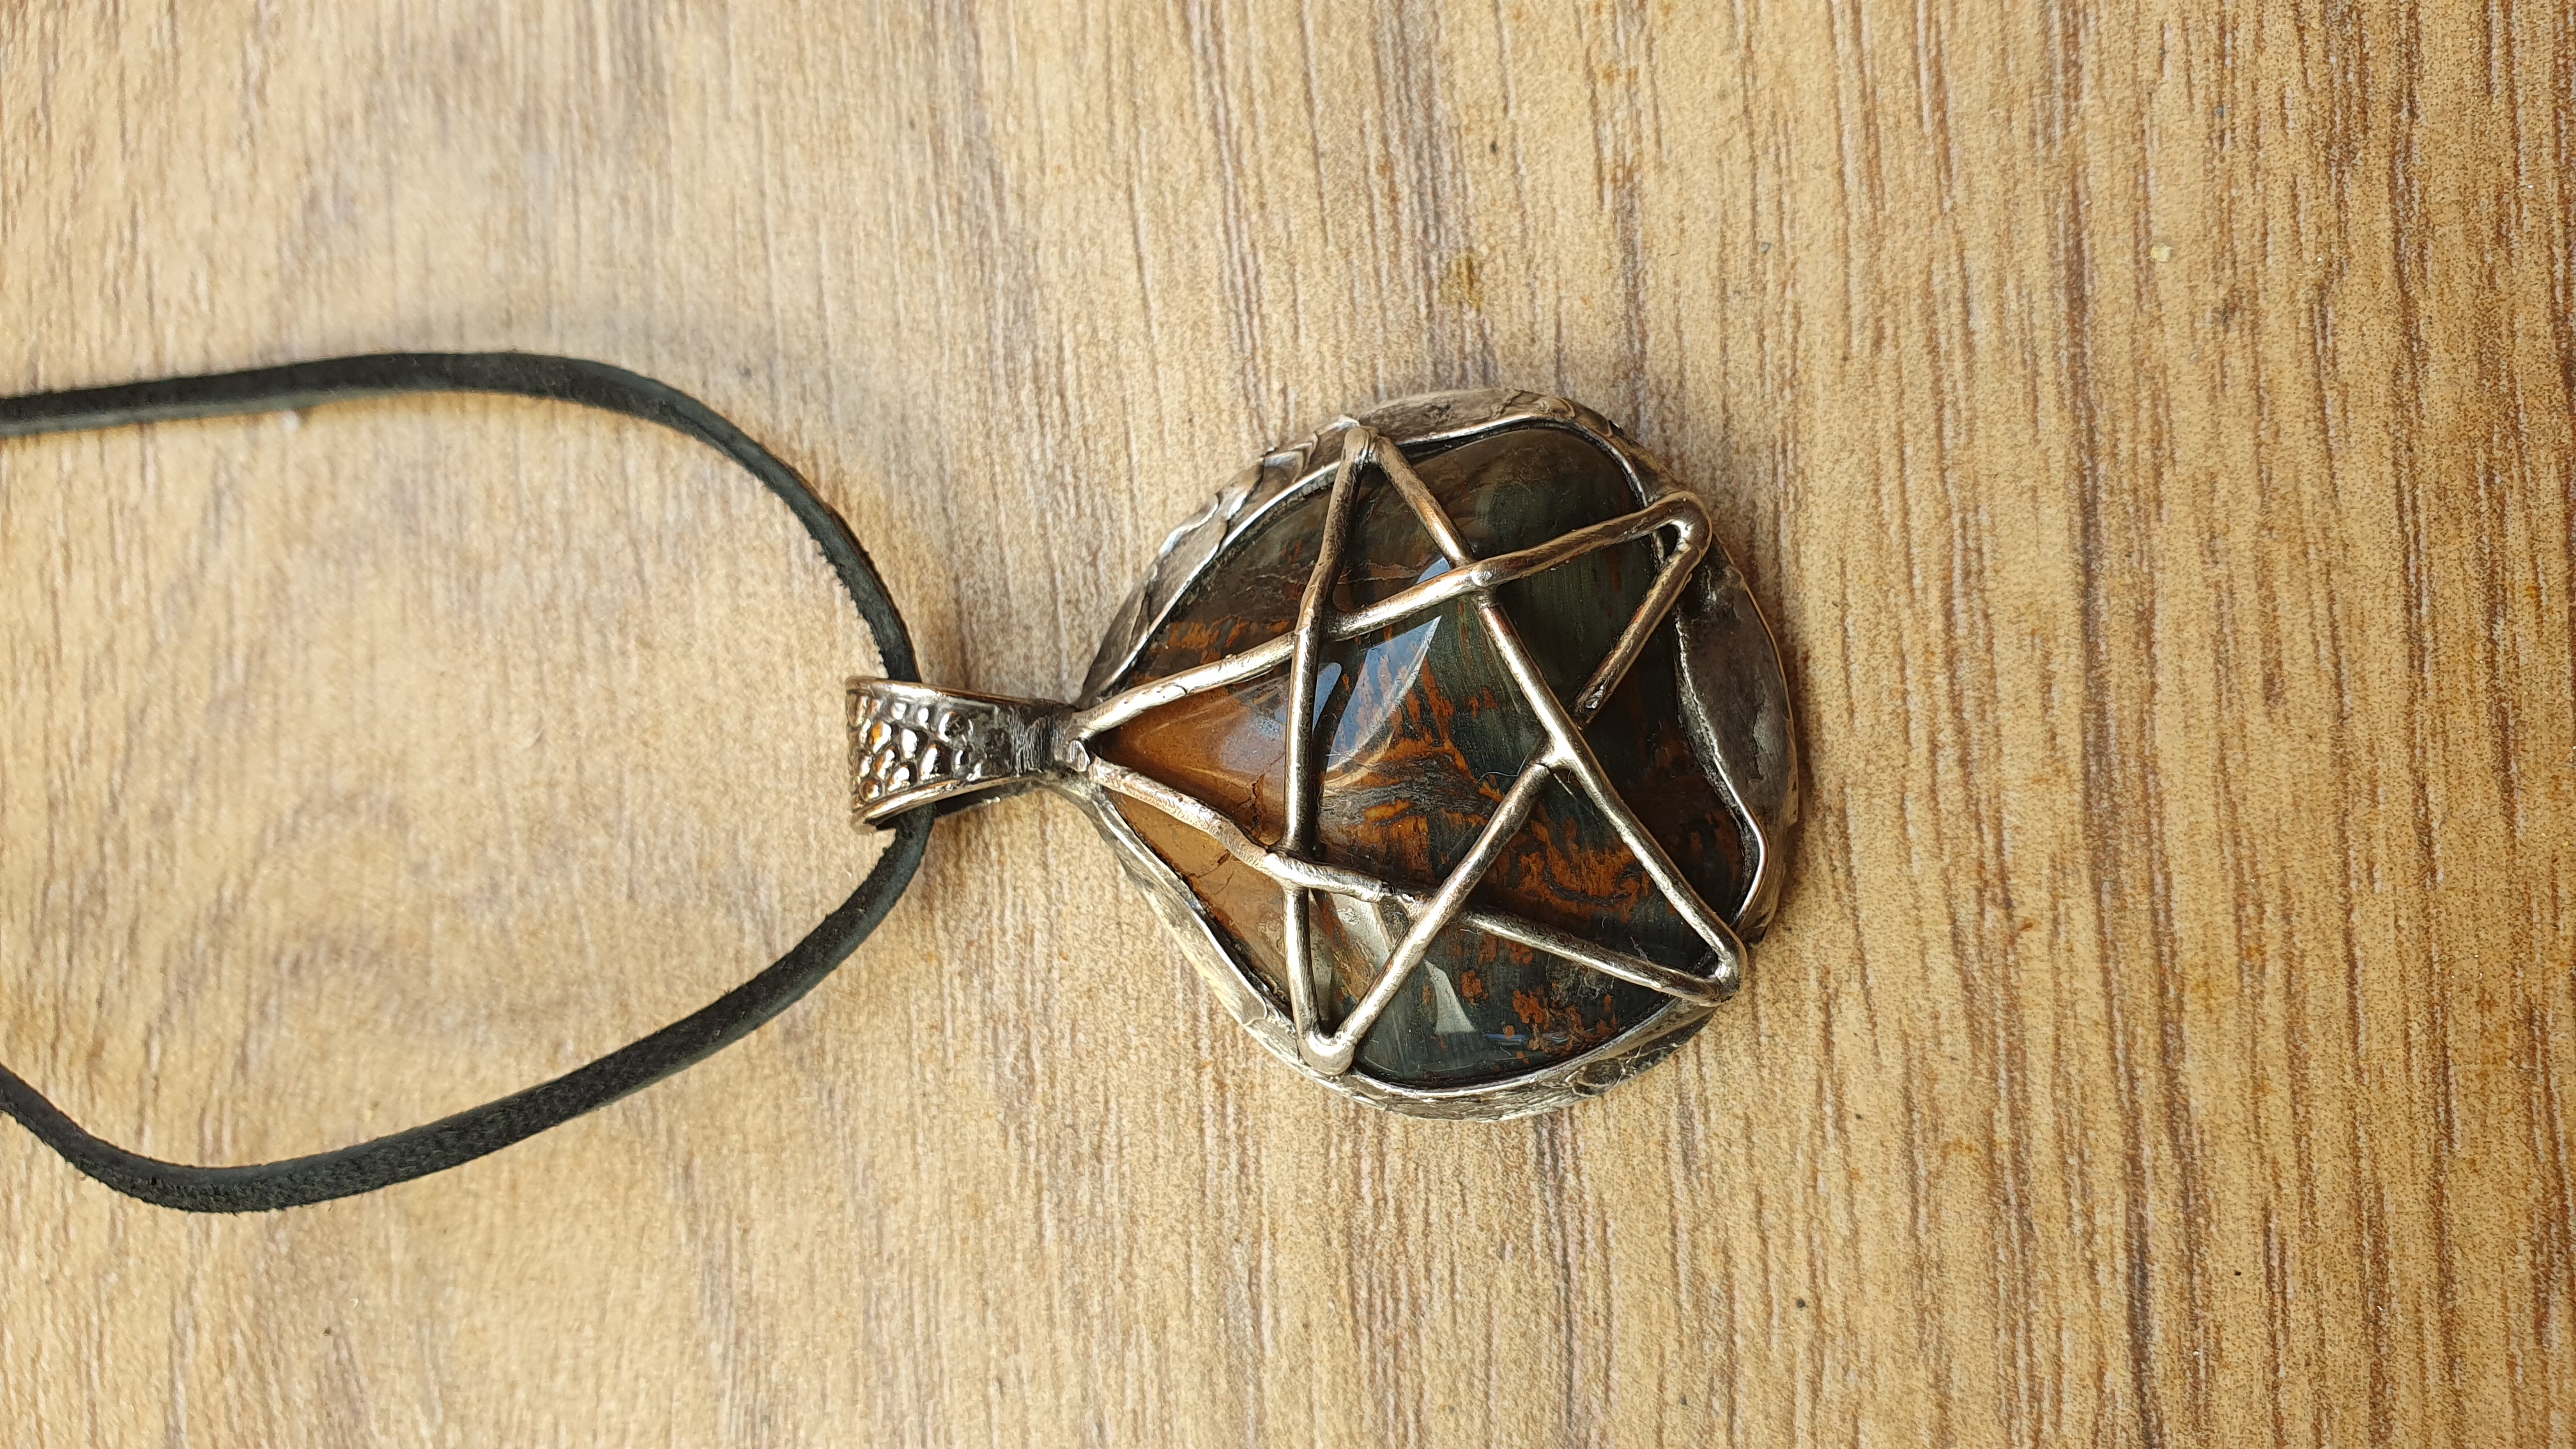 Cínovaný šperk s pentagramem na Jaspisu. Velikost 4,5 x 4 cm. Cena 500 Kč